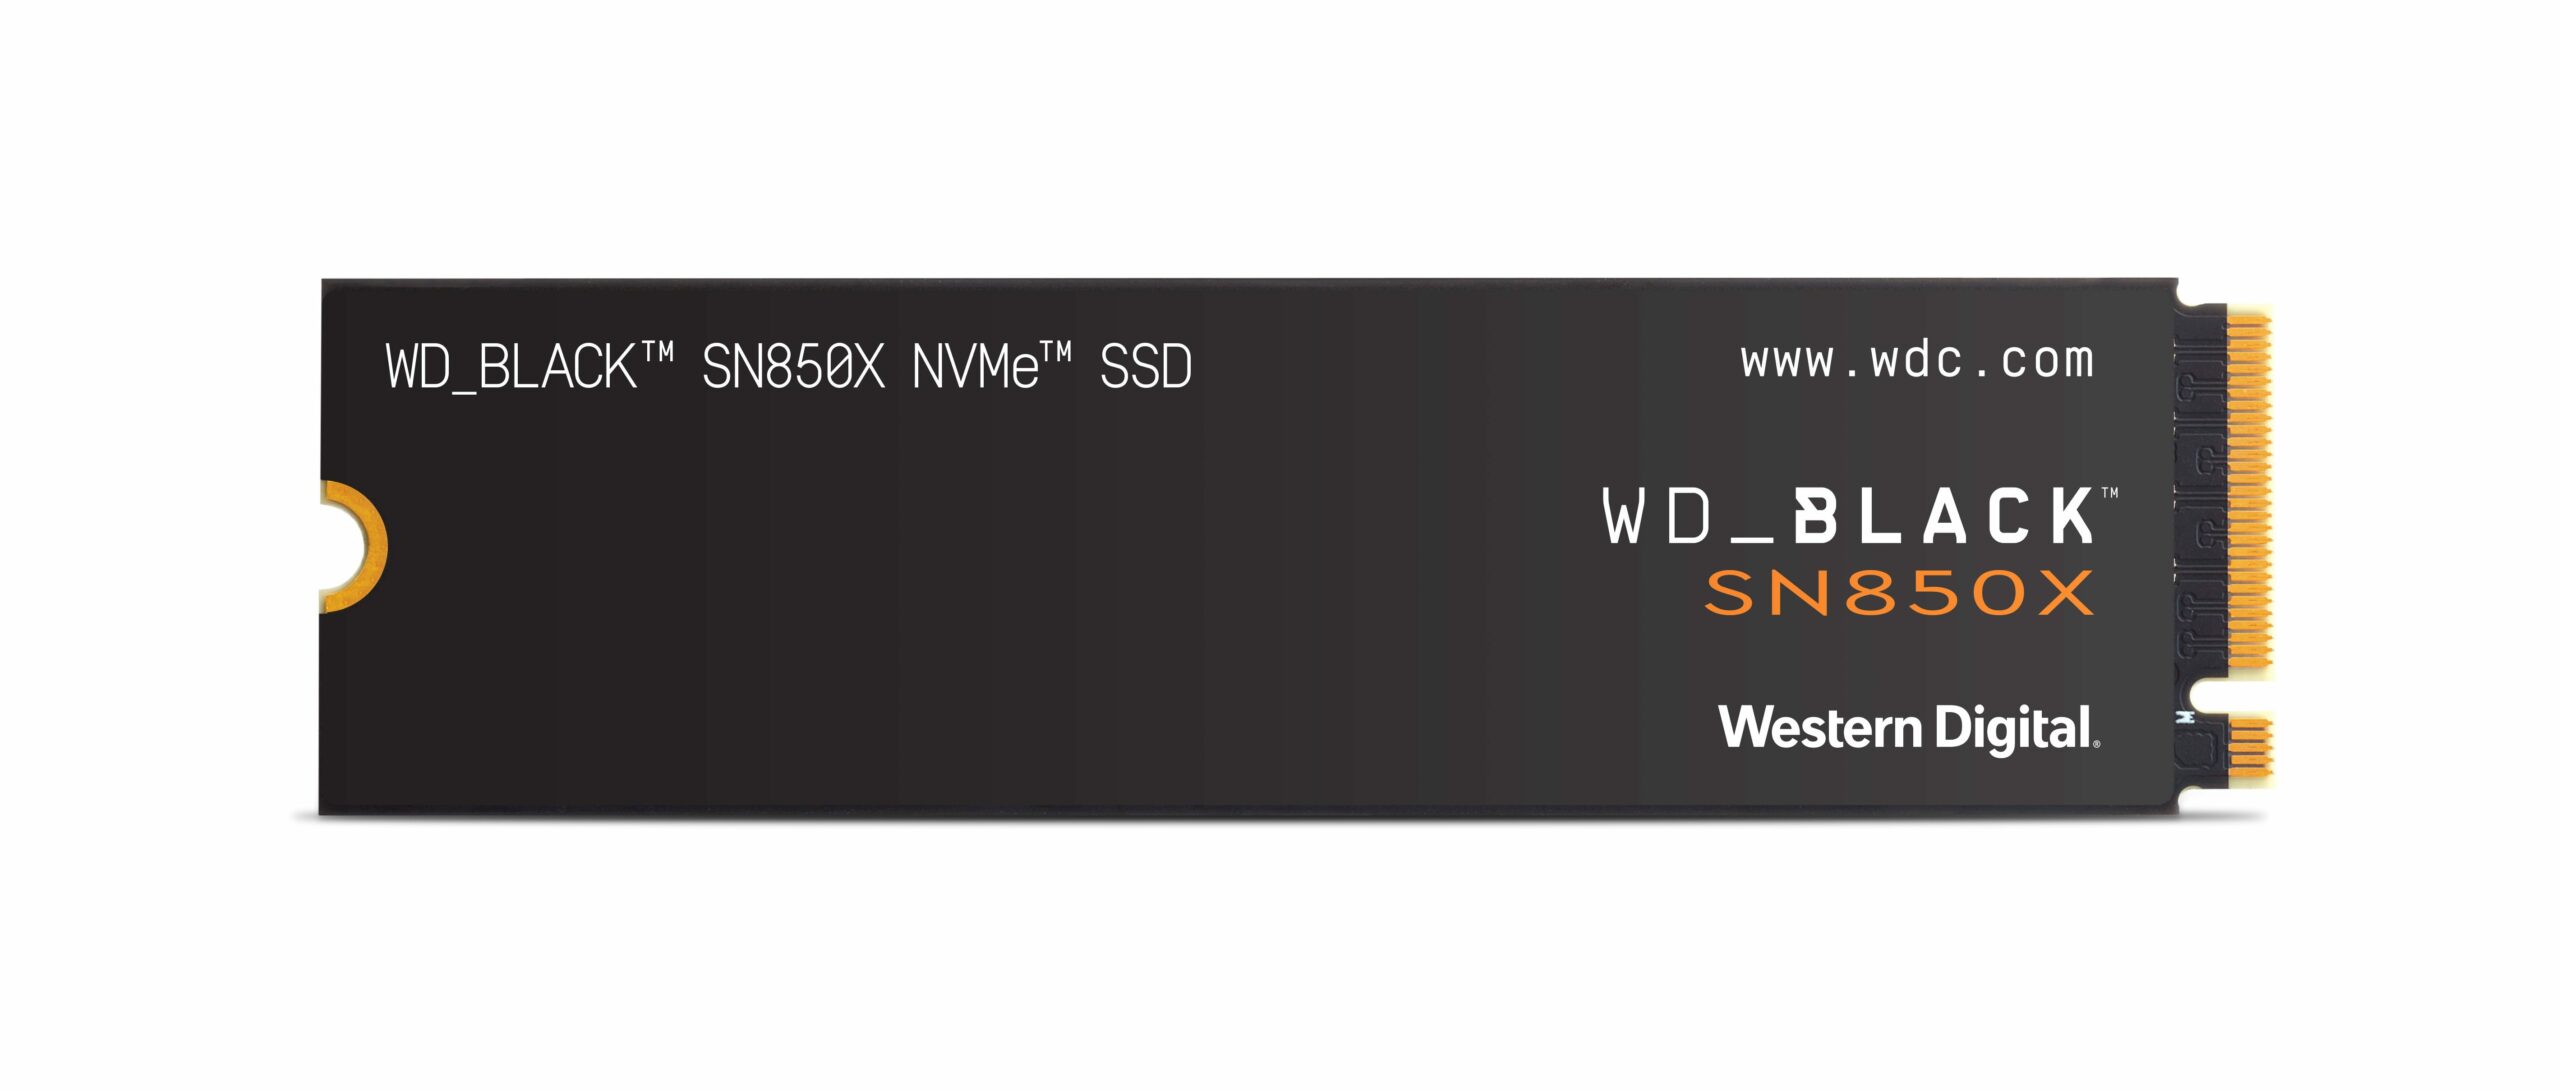 Primary2_WD_BLACK SN850X NVMe SSD prod-Img-straight-HR